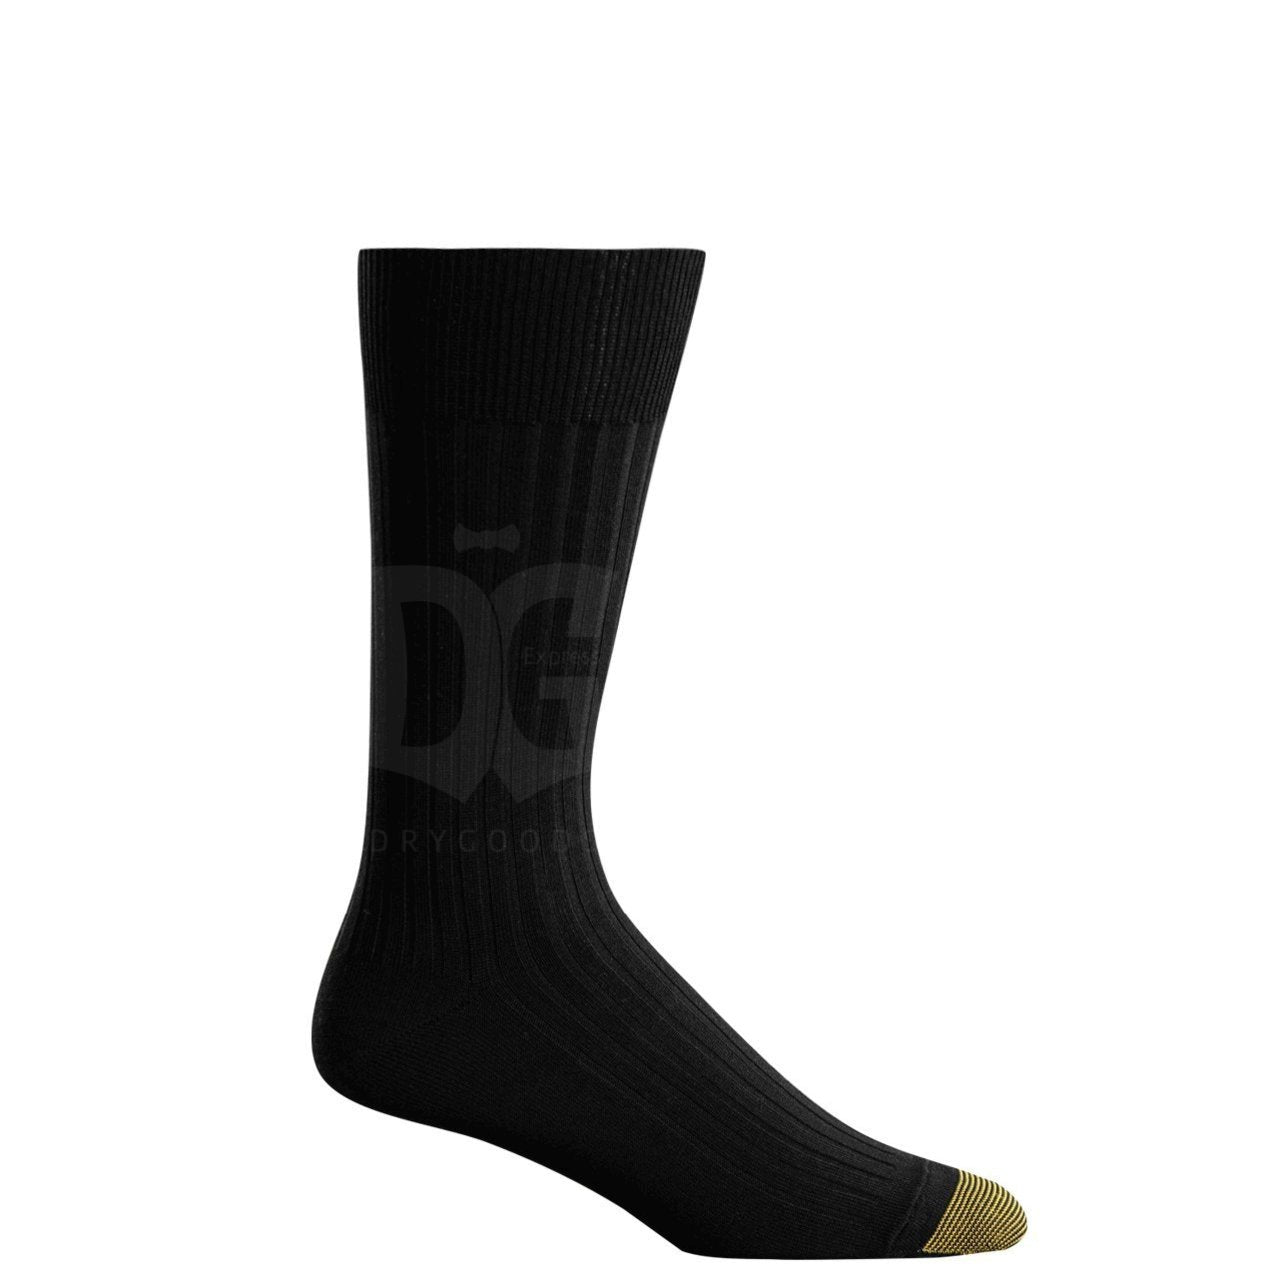 Goldtoe Mens Black Midcalf Socks